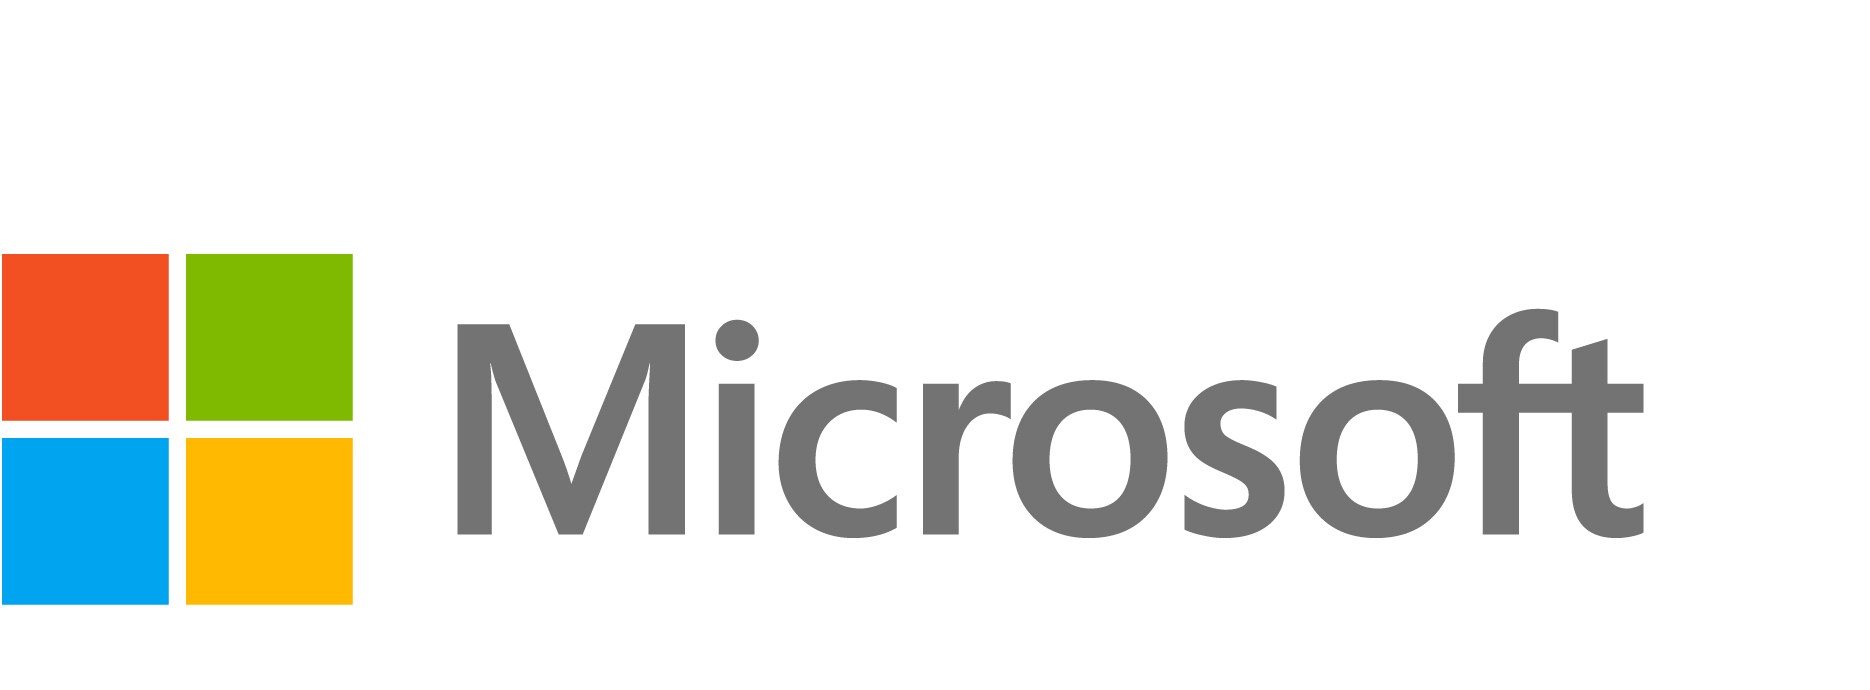 Microsoft Project - assurance logiciel - 1 utilisateur